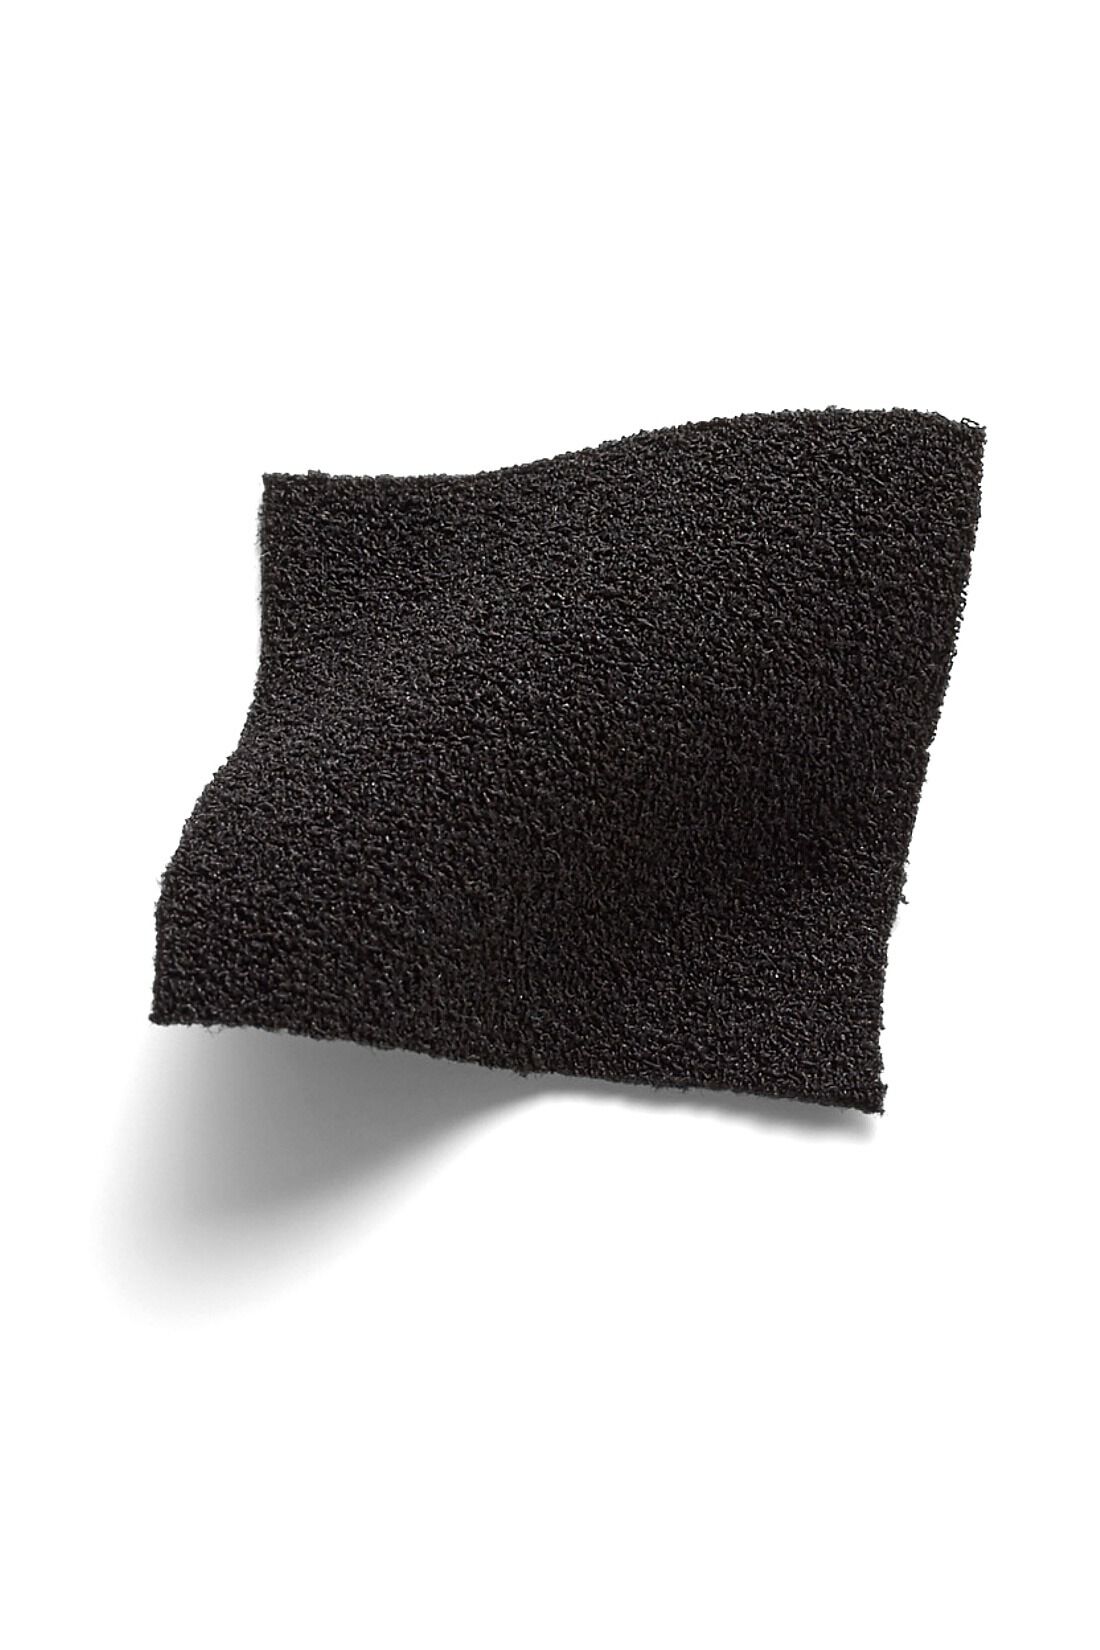 Live in  comfort|リブ イン コンフォート　パール調ブローチ付き　らくちんカットソーのブラックワンピース|きちんと布はく見えする上品なカットソージョーゼット素材。